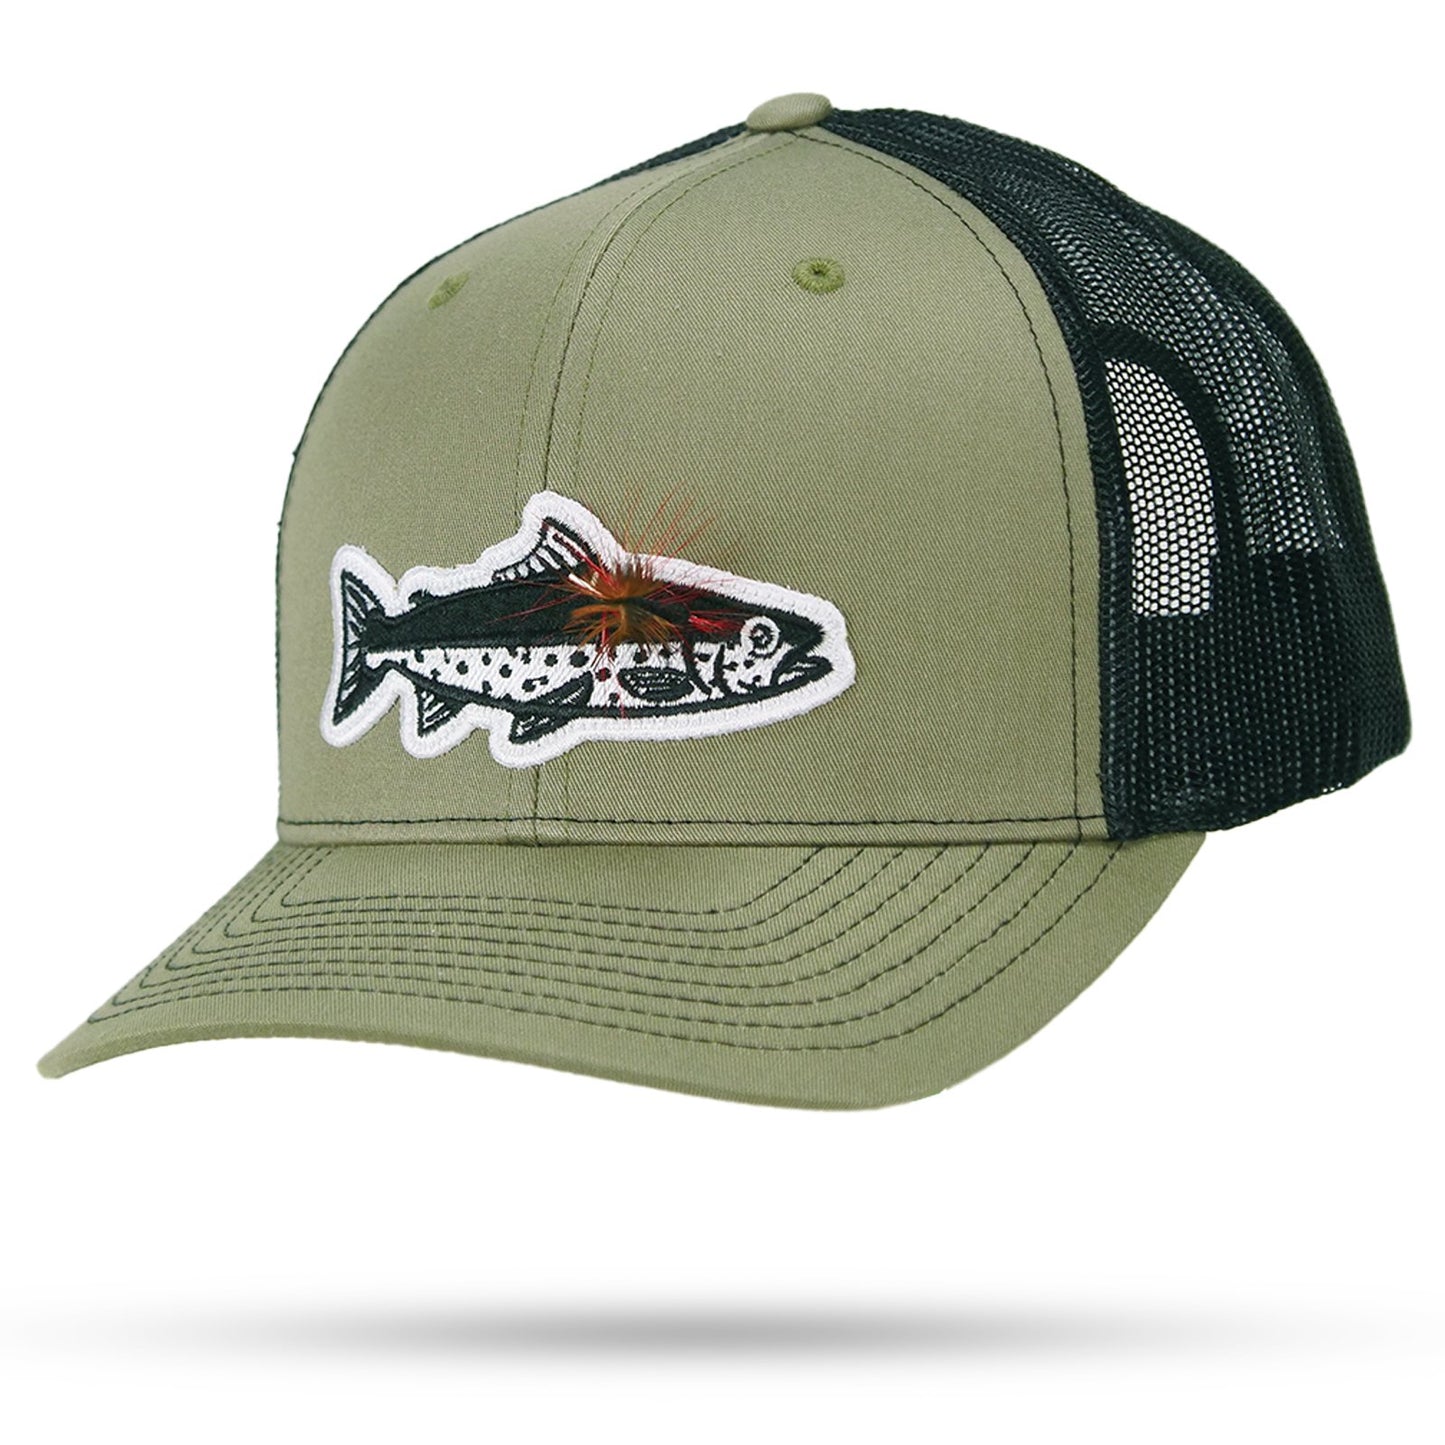 Fish Hook & Loop Trucker Cap - Ultimate Fishing Hat